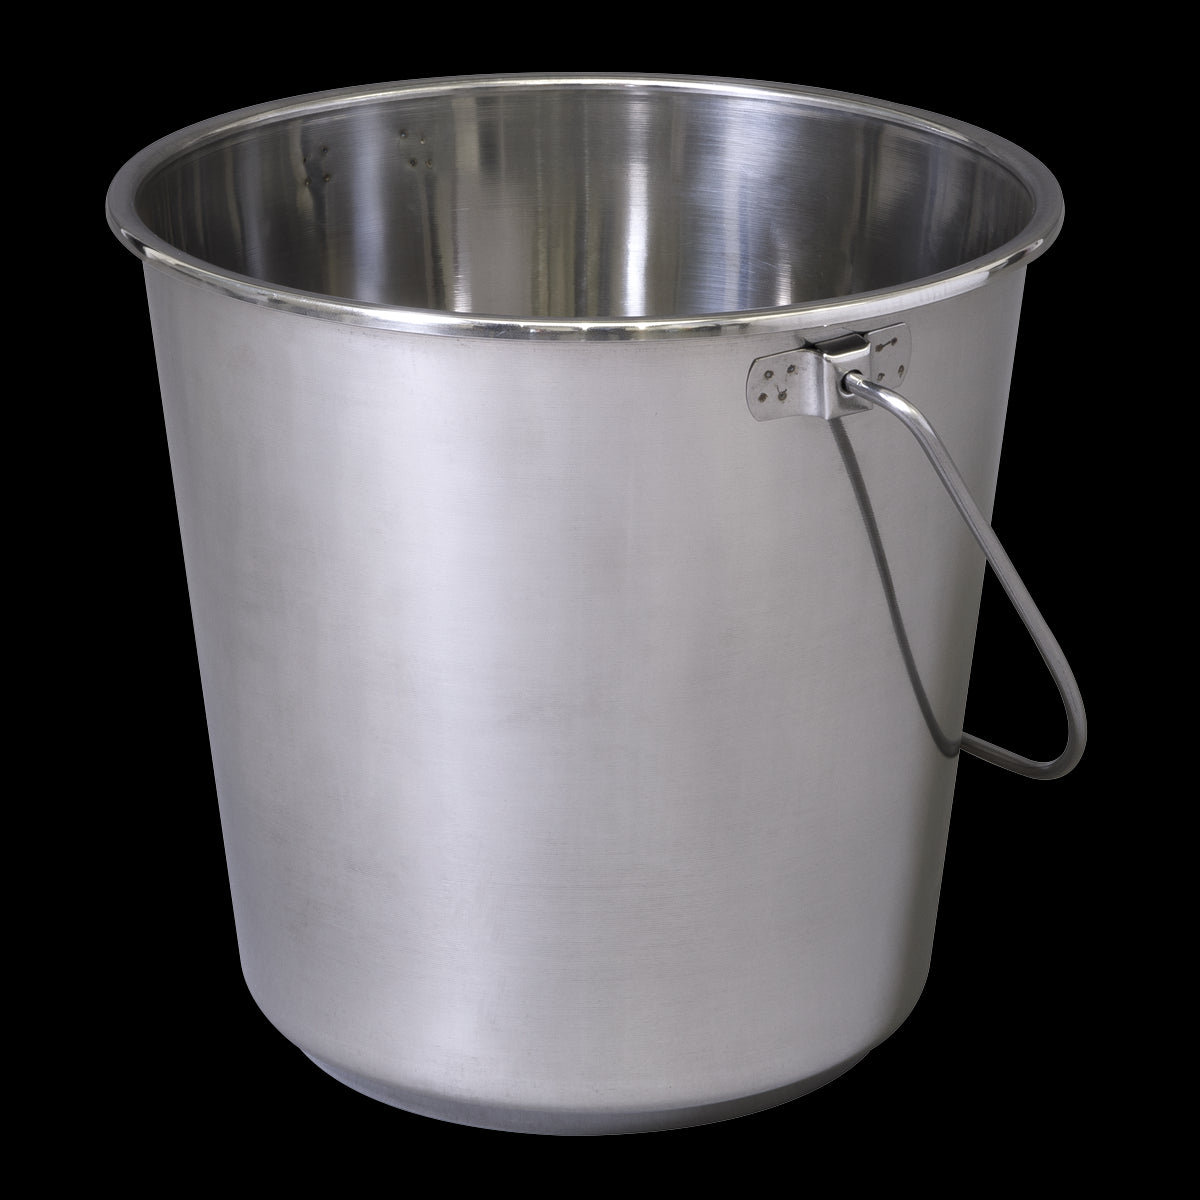 Sealey Mop Bucket 12L - Stainless Steel